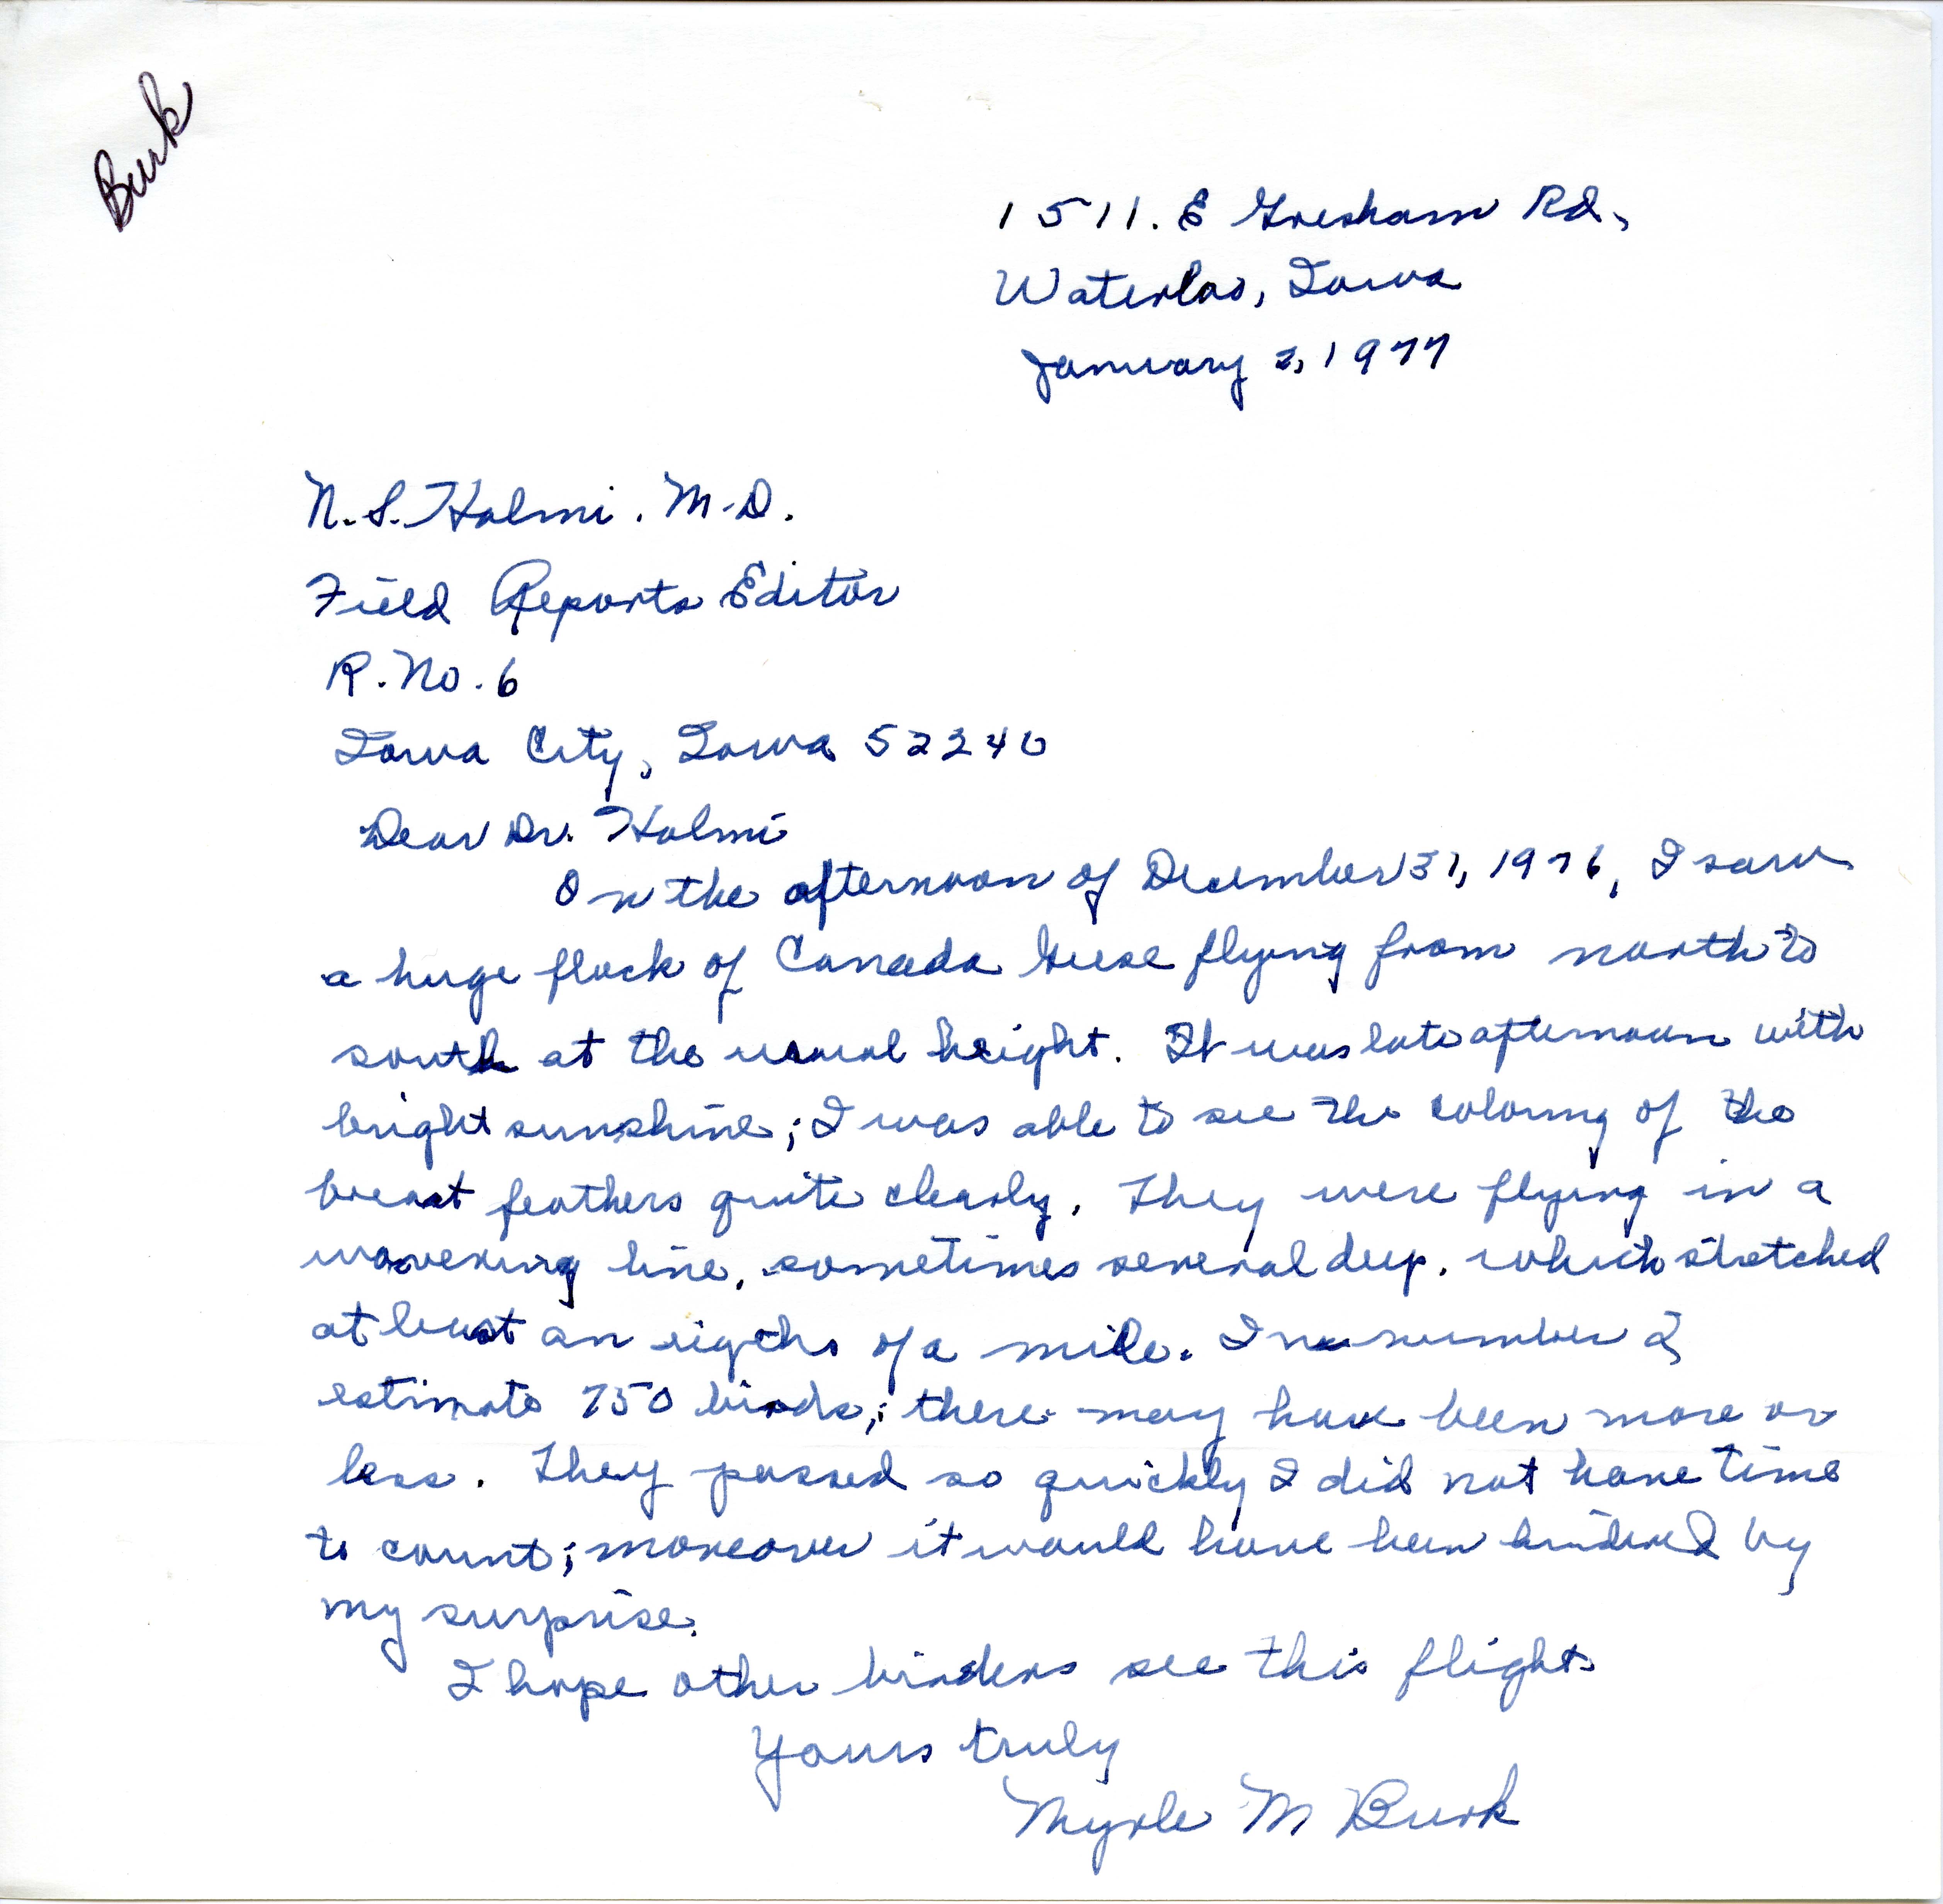 Myrle M. Burk letter to Nicholas S. Halmi regarding a sighting of a flock of Canada Geese in Waterloo, Iowa, January 2, 1977 